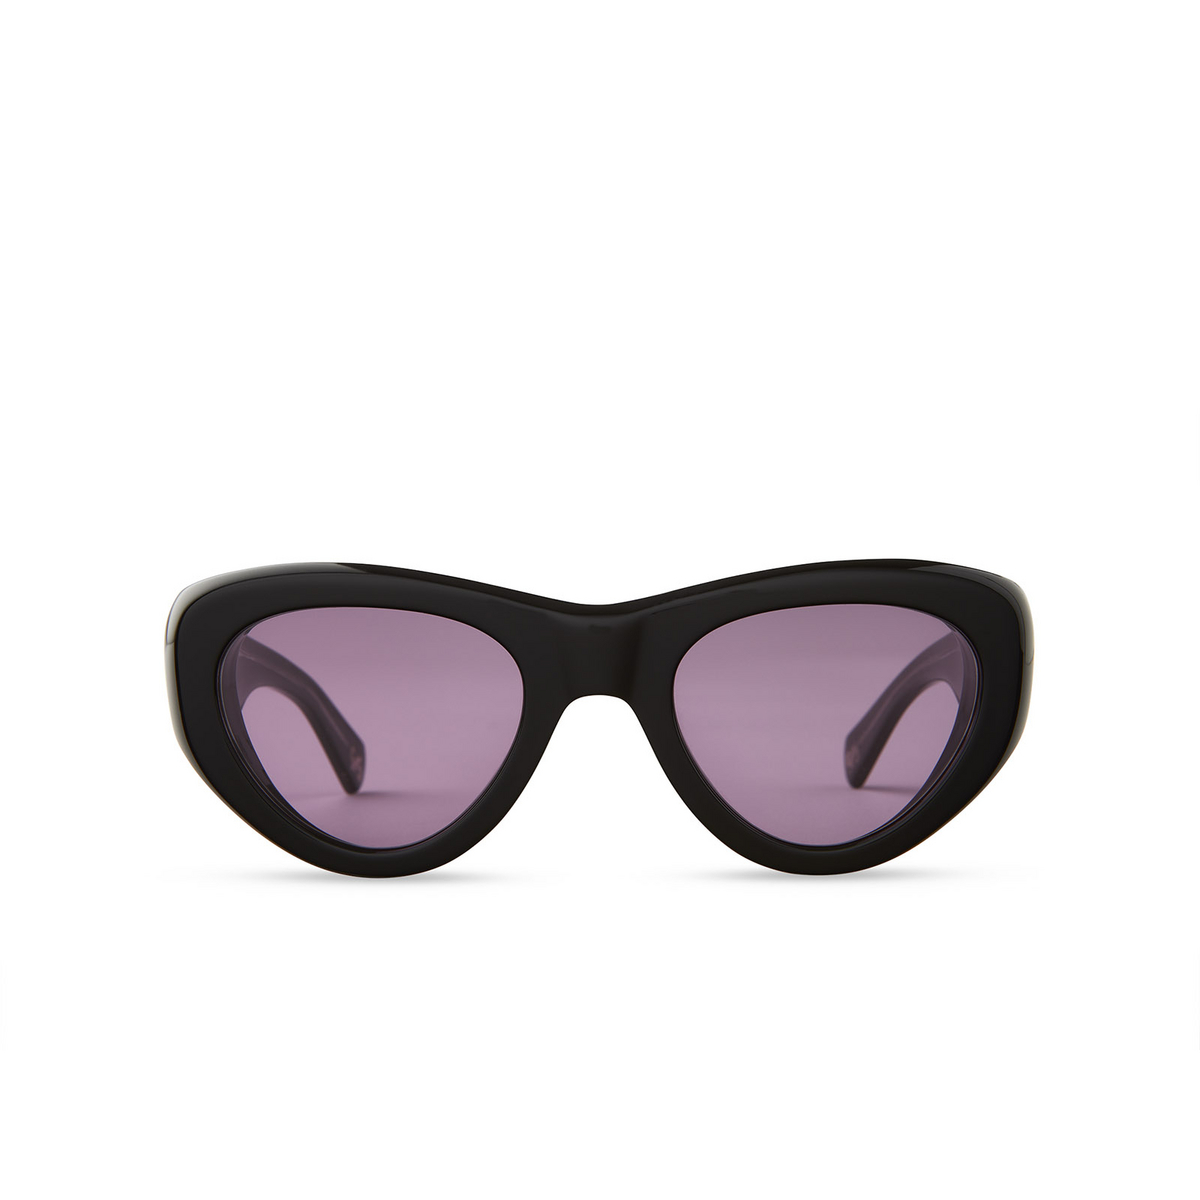 Mr. Leight REVELER S Sunglasses BK-PW/SFHIBIS Black-Pewter - front view